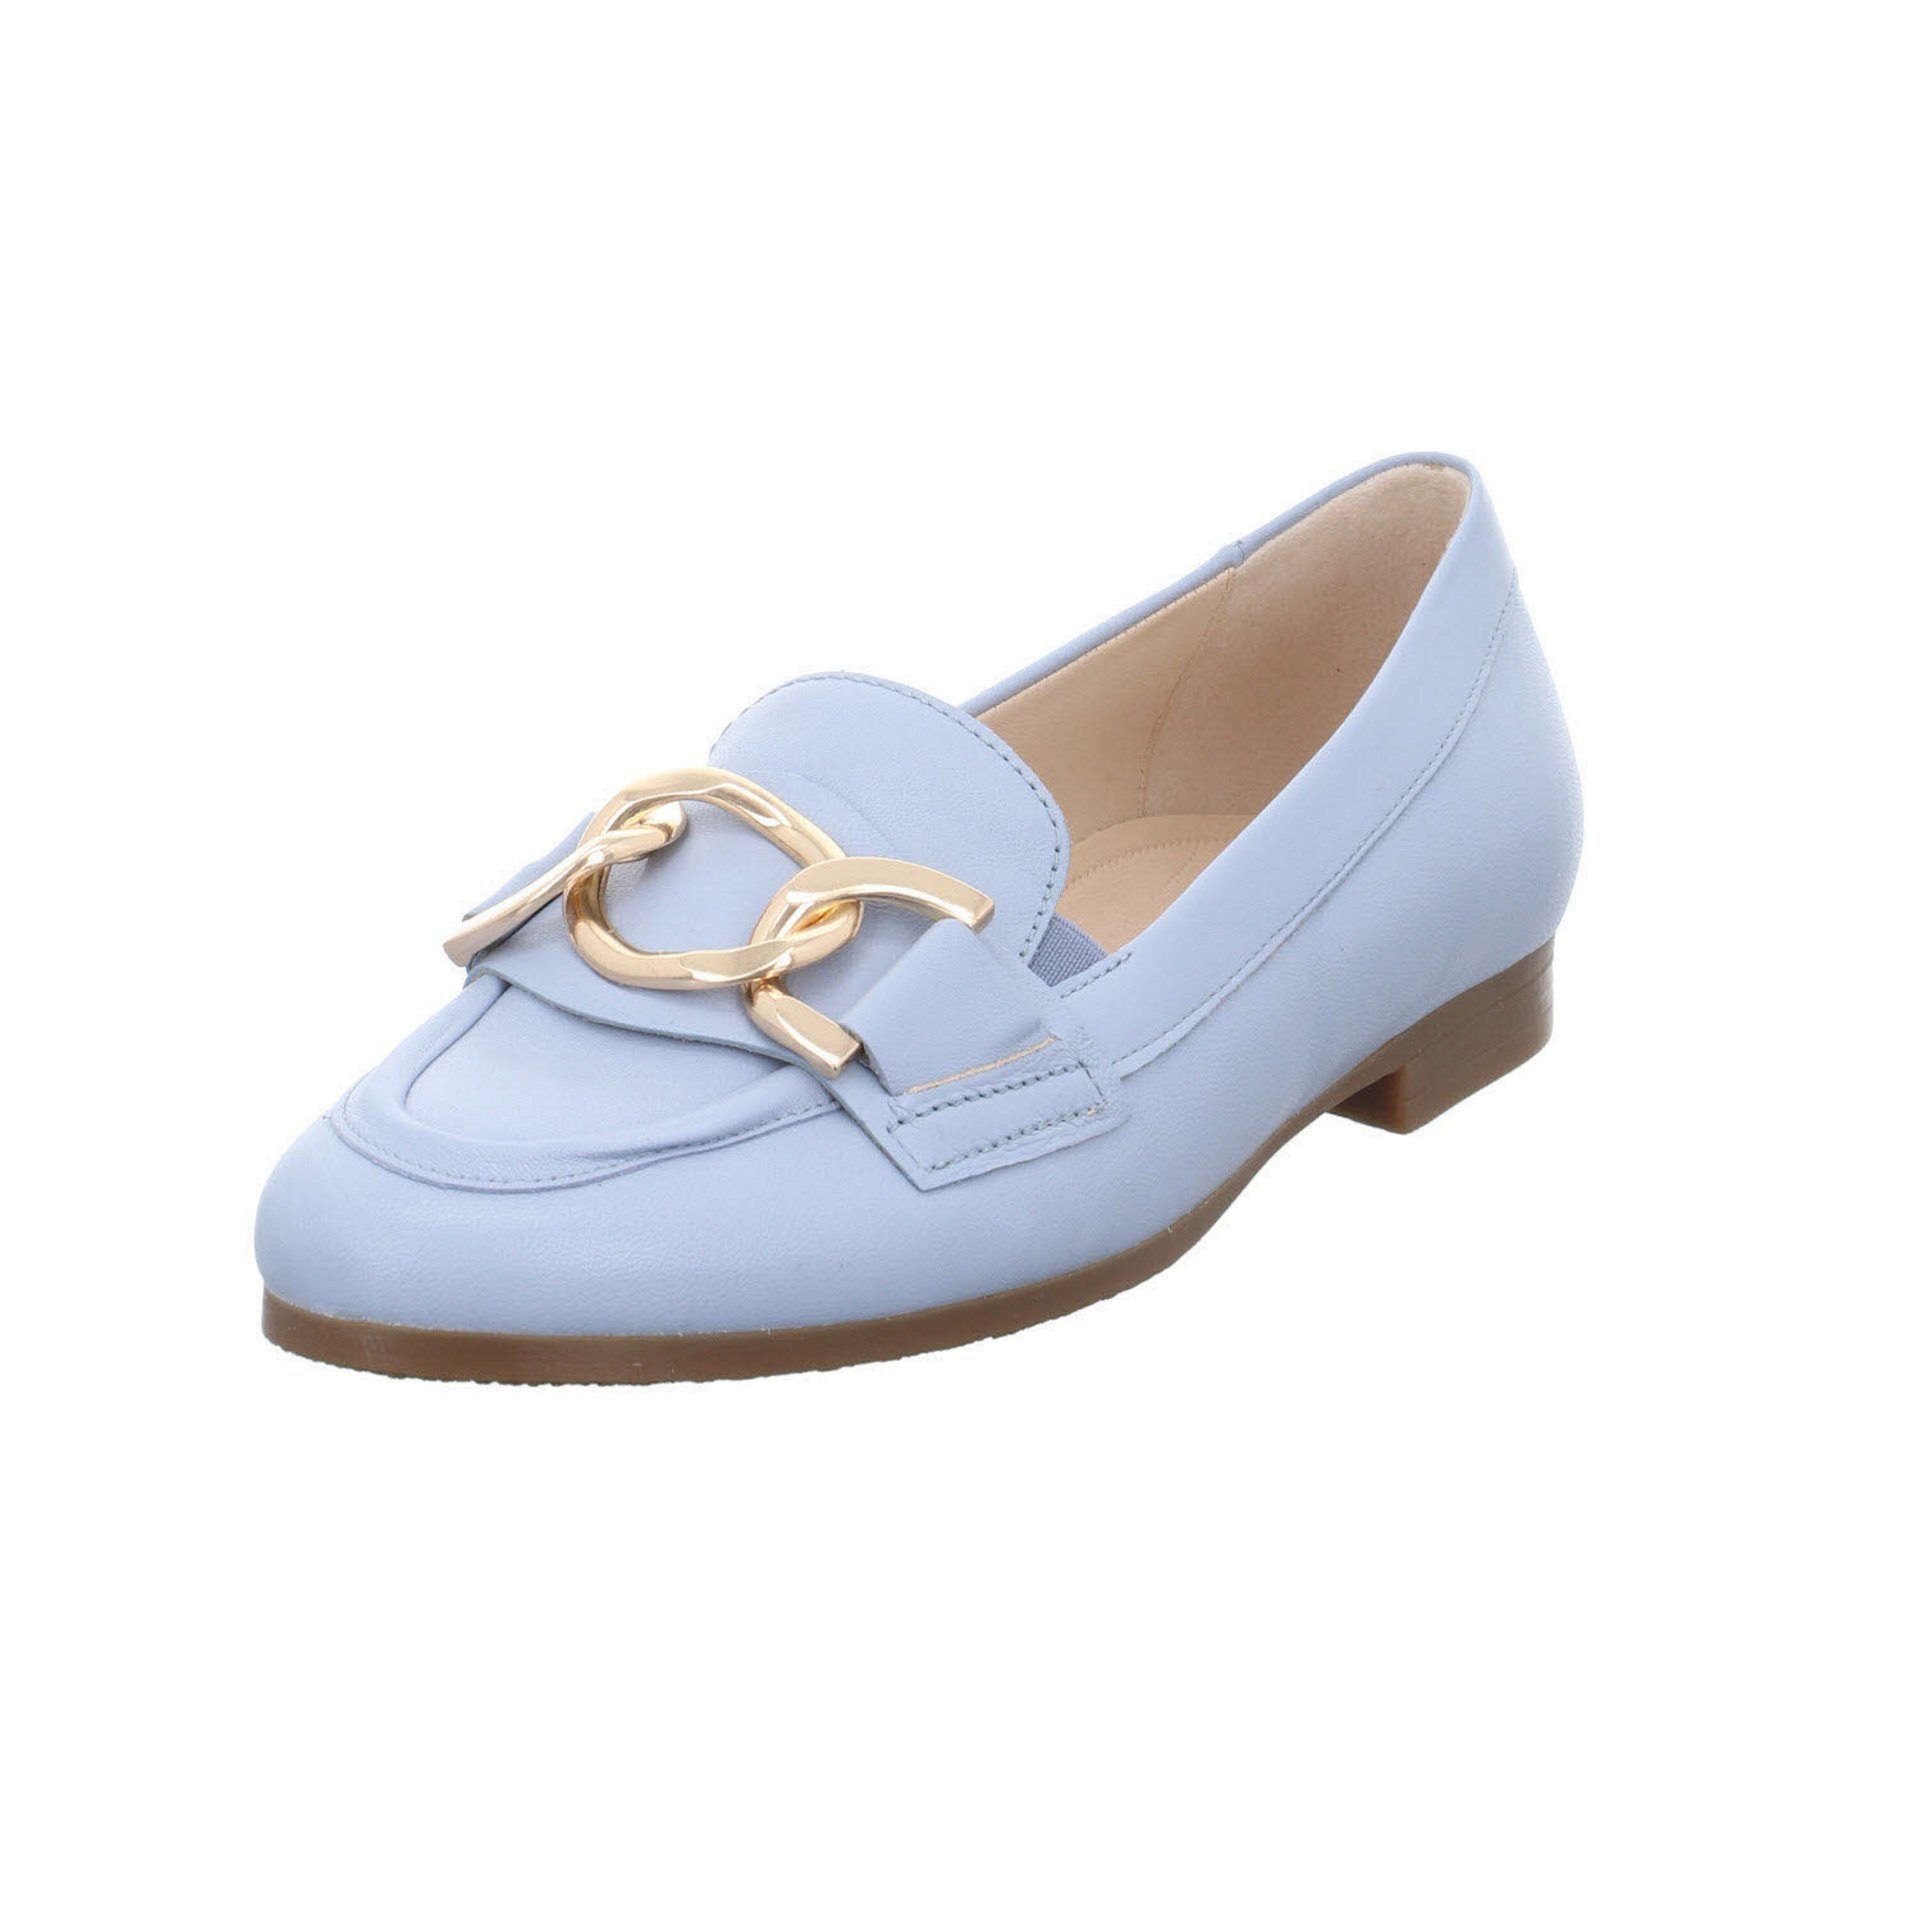 Gabor »Damen Slipper Schuhe Florenz Slipper« Slipper online kaufen | OTTO